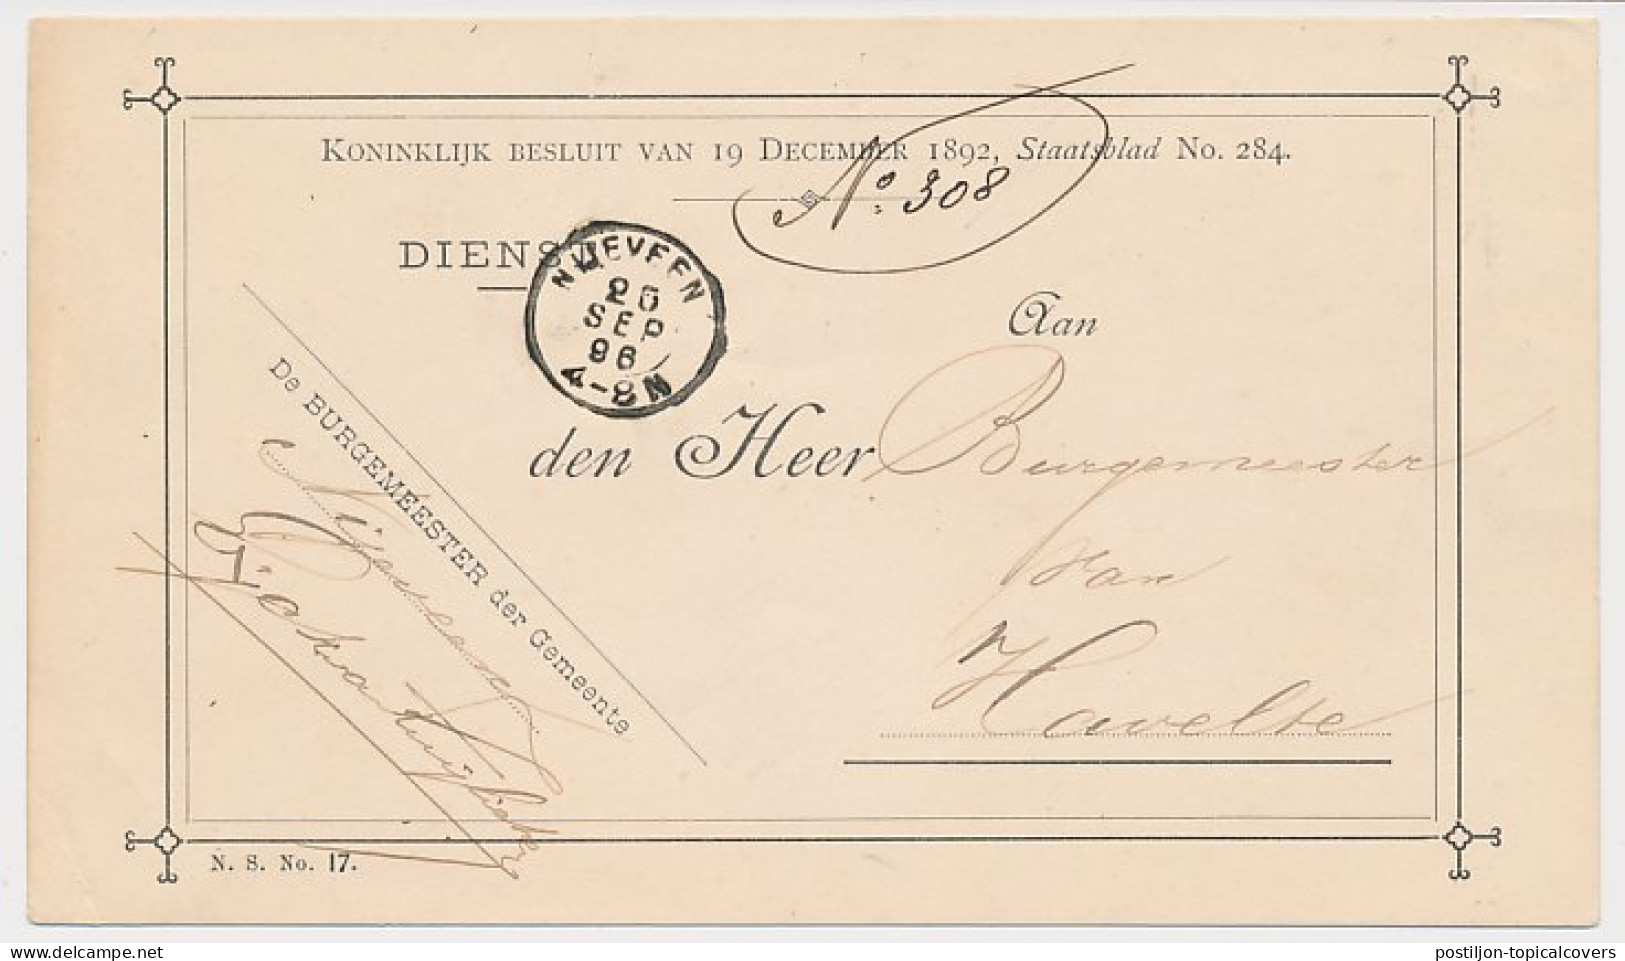 Kleinrondstempel Nijeveen 1896 - Non Classés